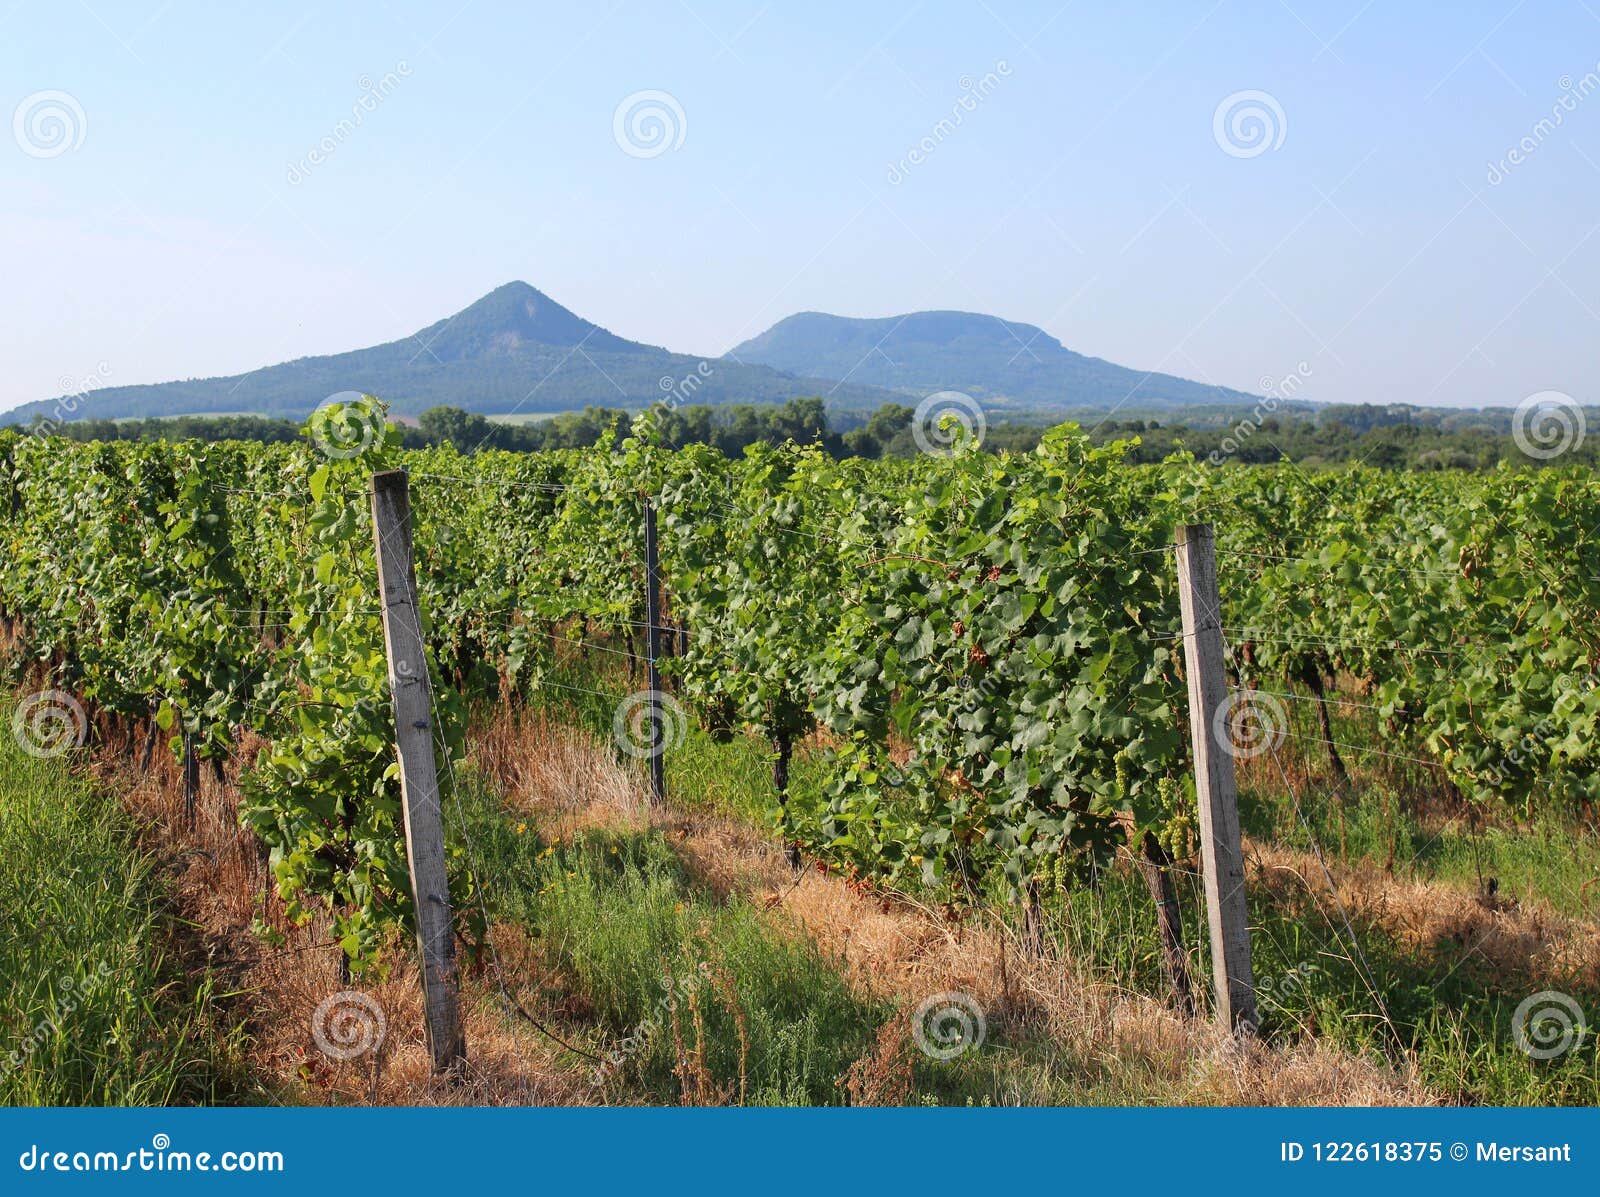 grape plantation and mount toti and gulacs